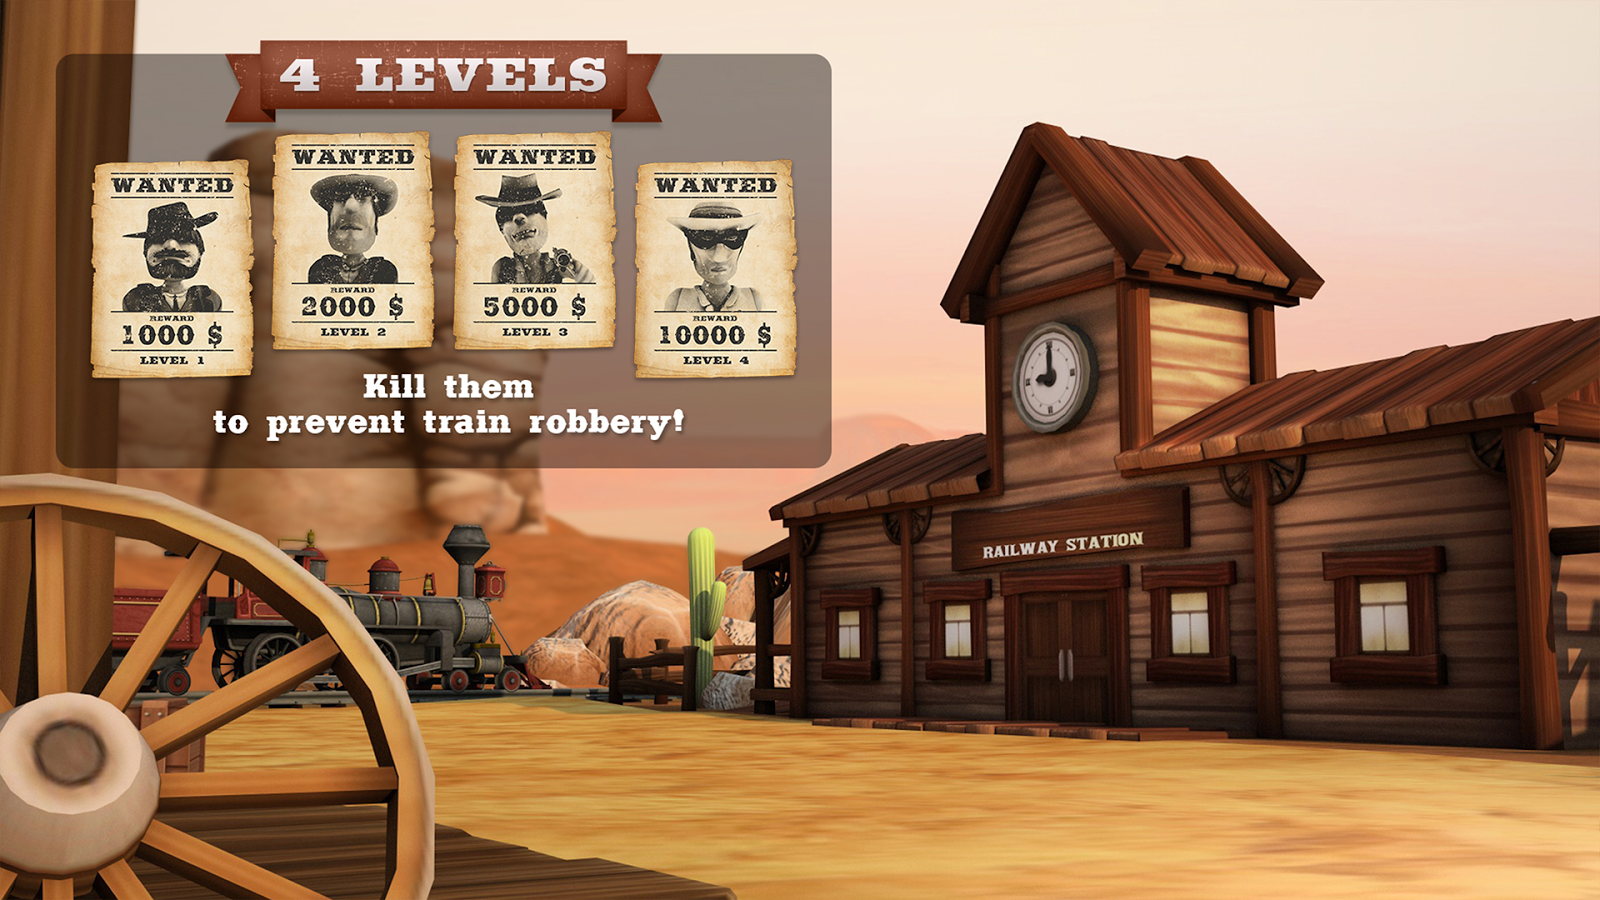    Sheriff VR - Cardboard- screenshot  